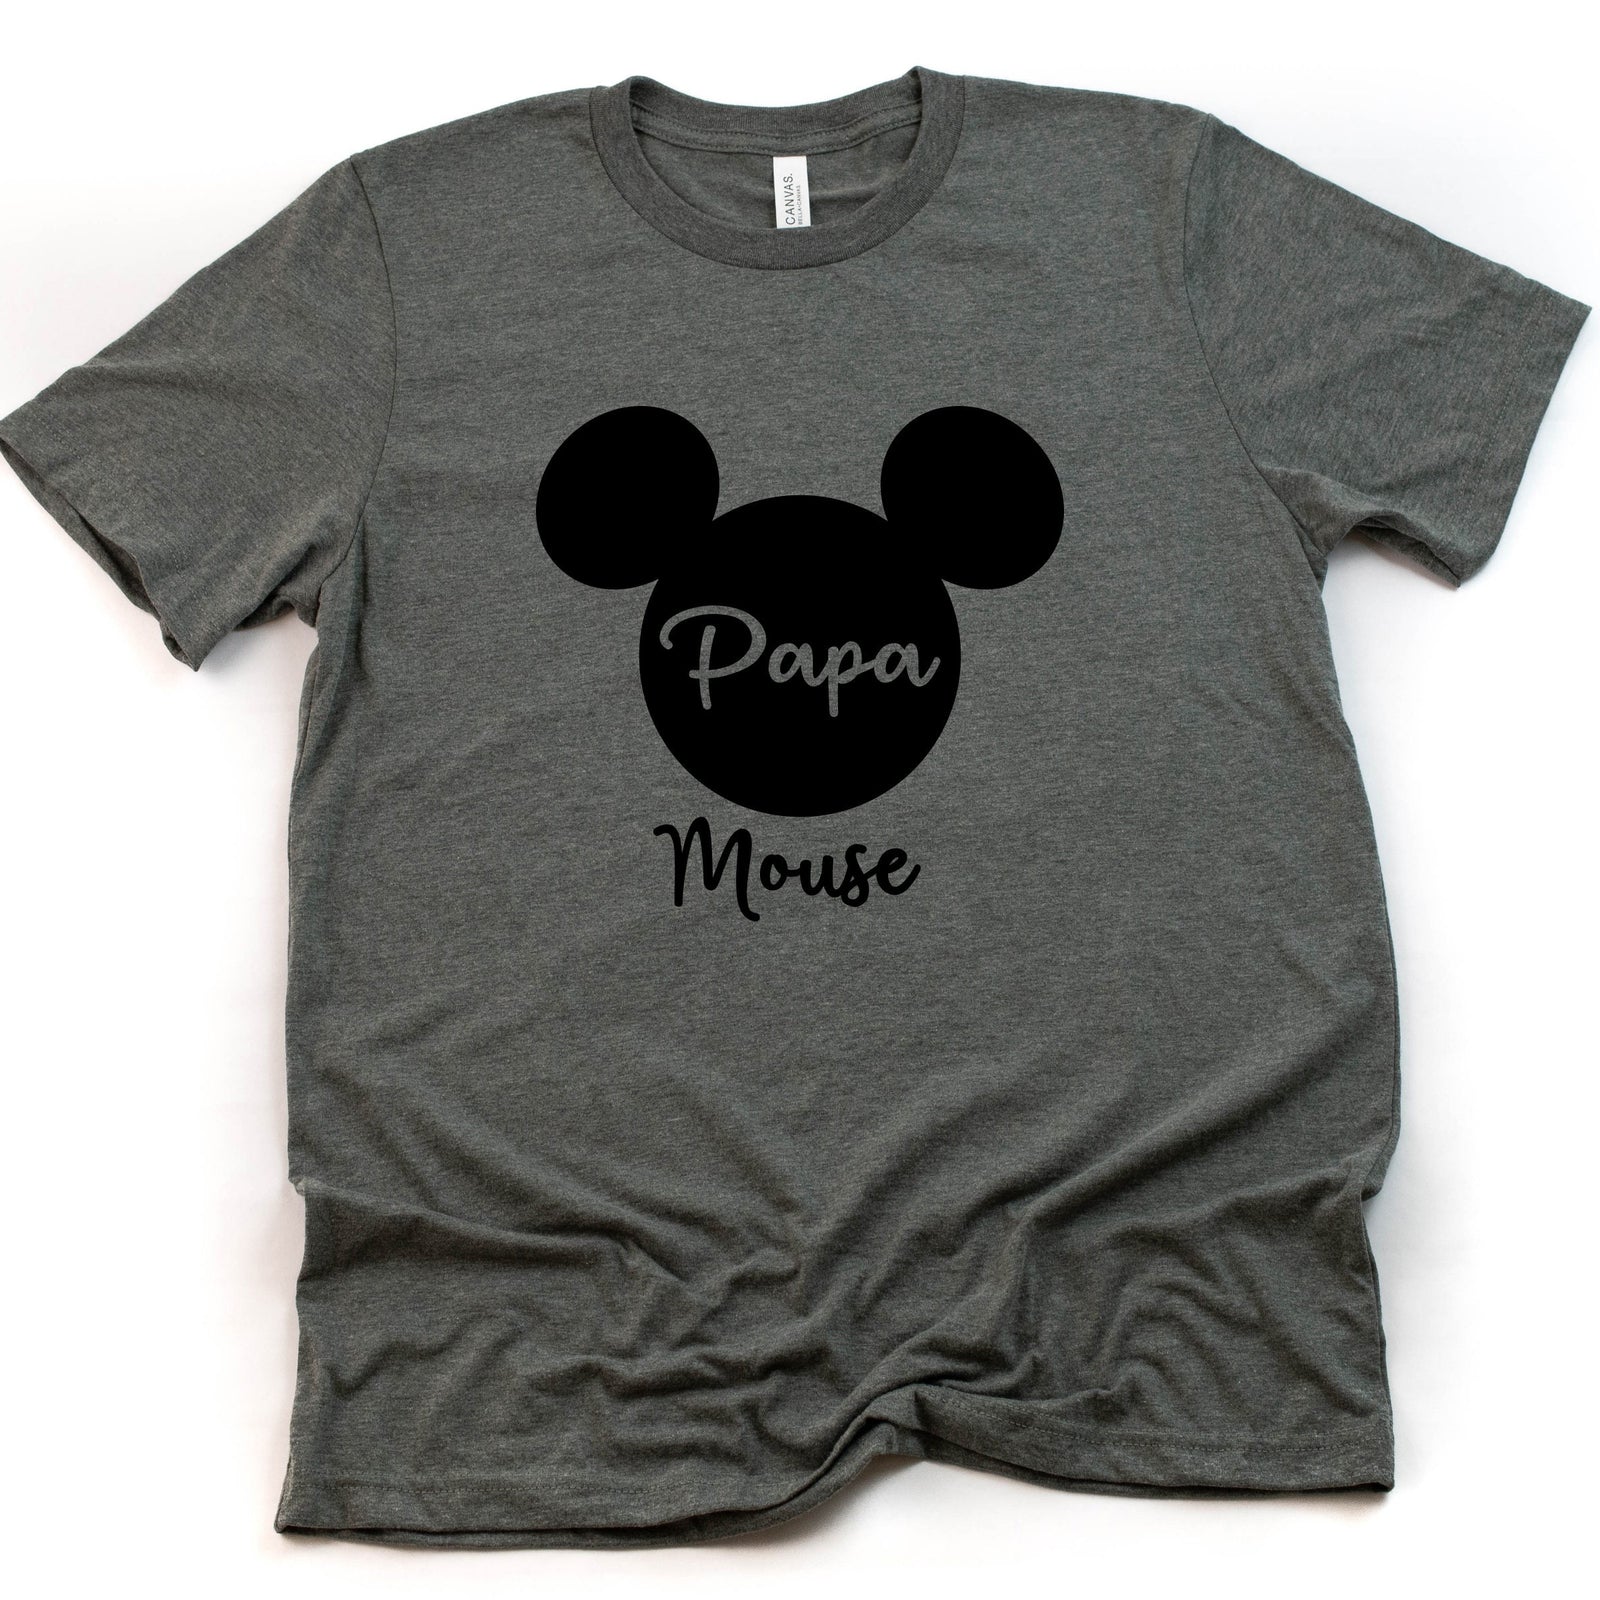 Papa Mickey Mouse t shirt - Disney Trip Matching Shirts -Family Matching Disney Shirts - Custom Name